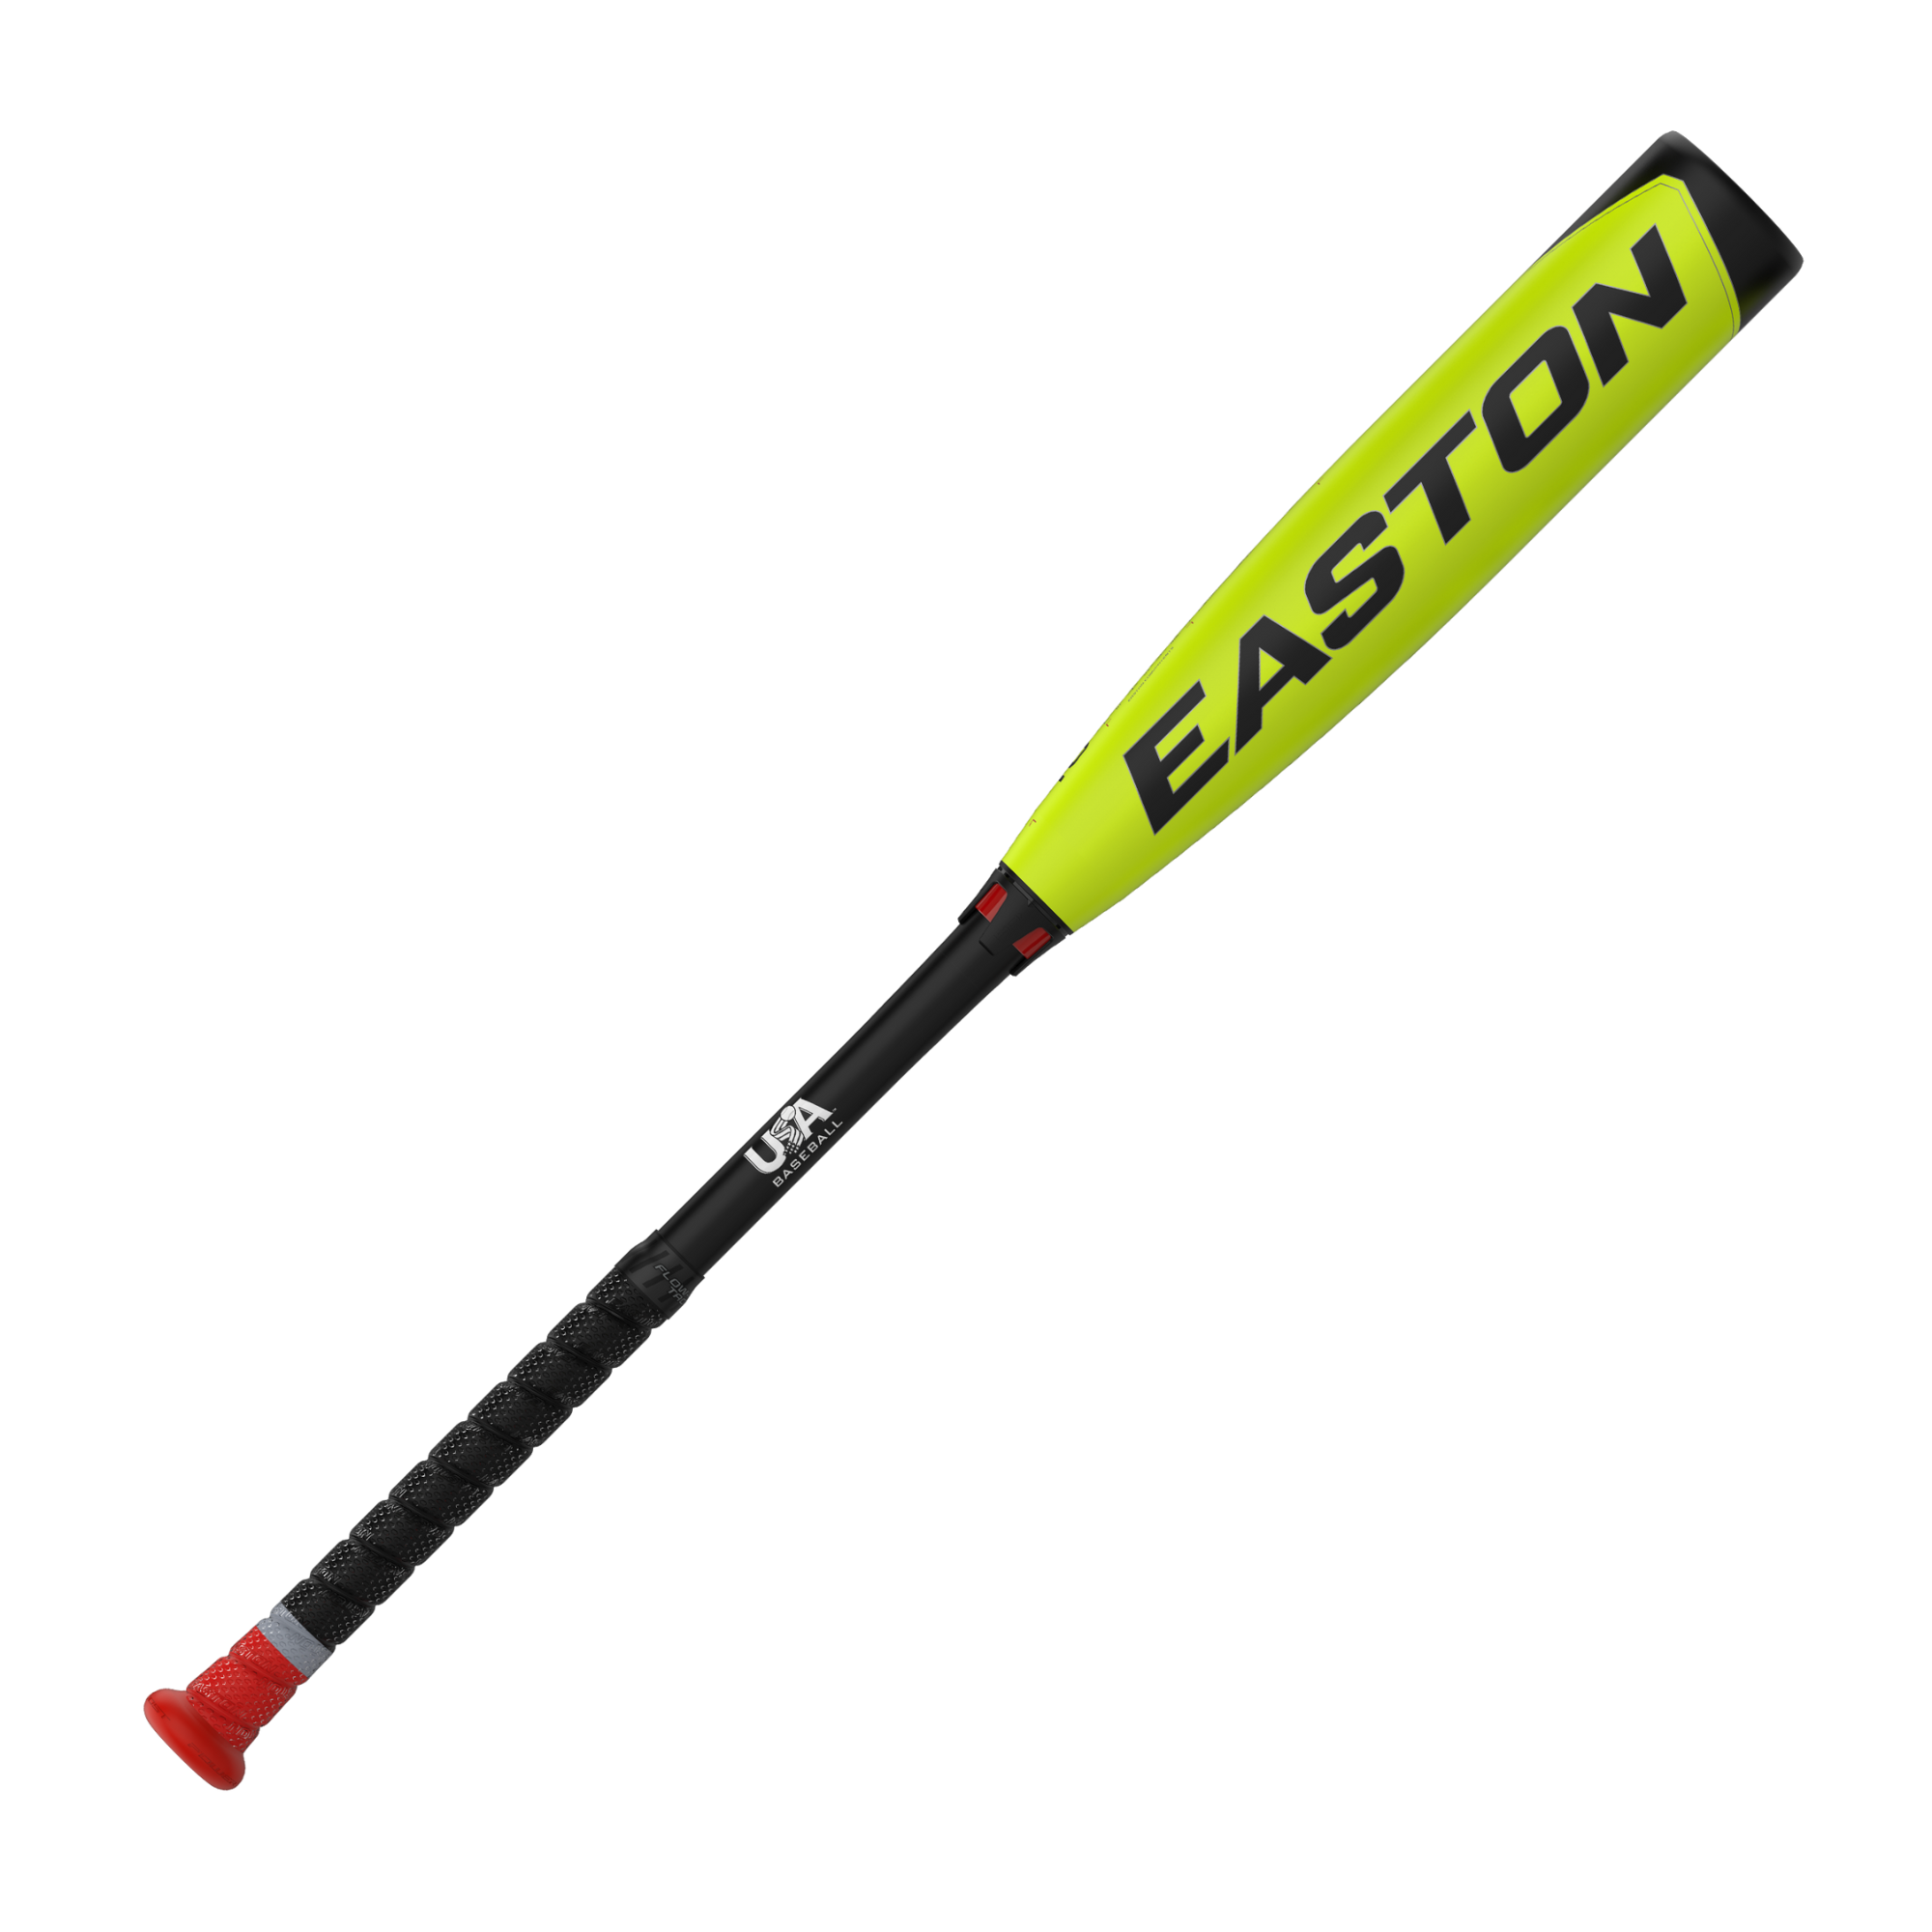 Easton ADV 360 -10 (2 5/8" Barrel) USA Youth Baseball Bat